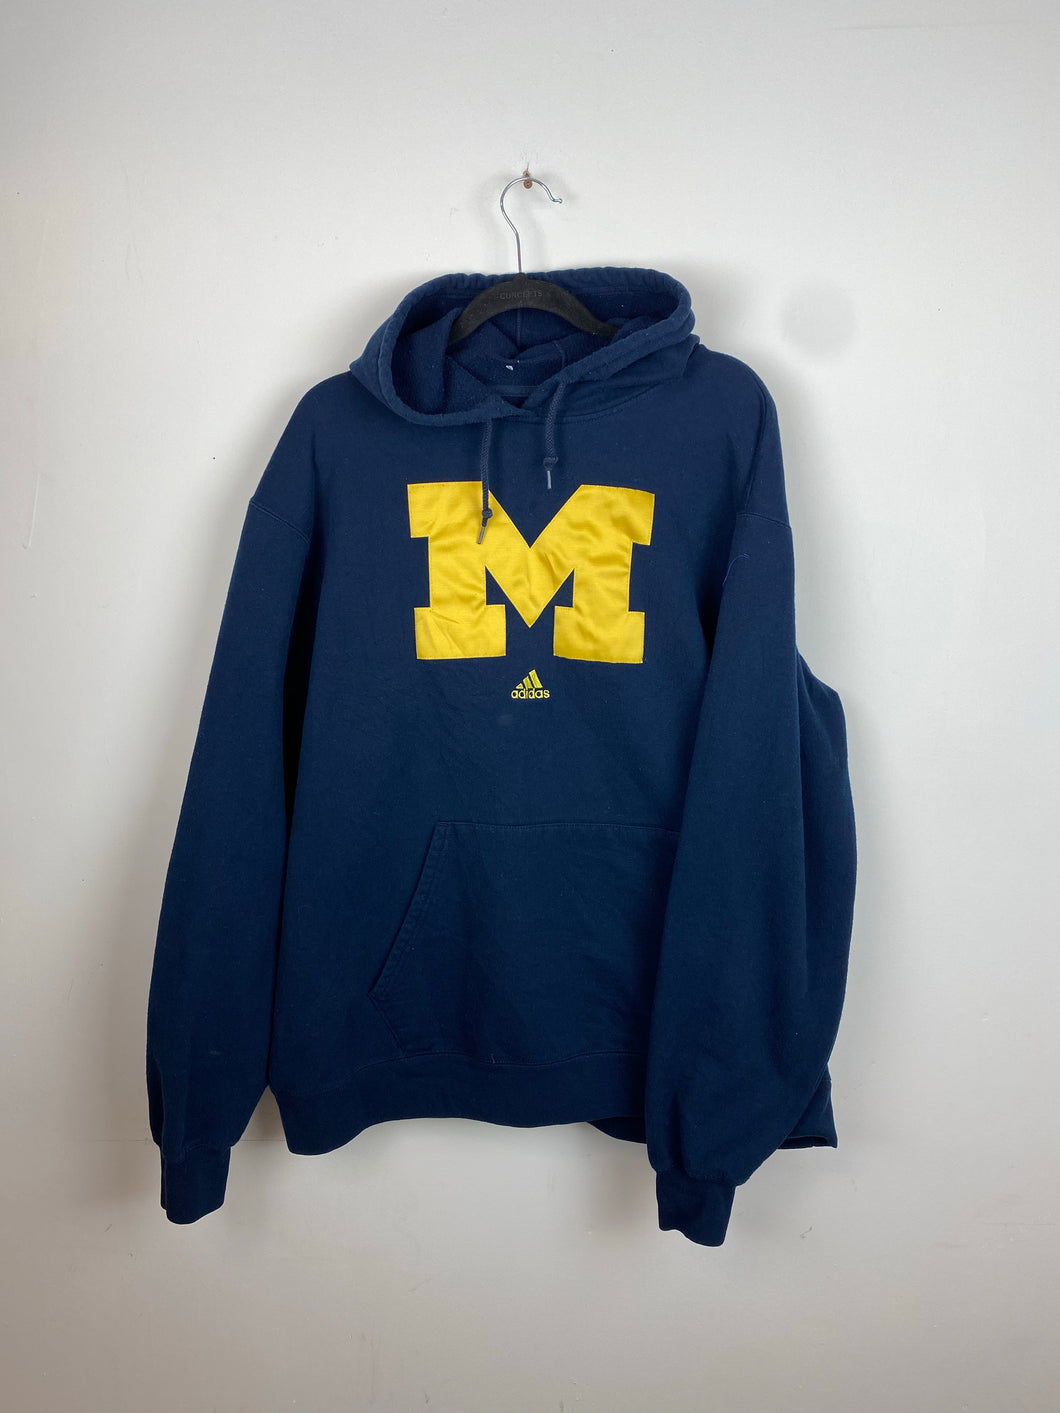 90s Michigan State Adidas hoodie